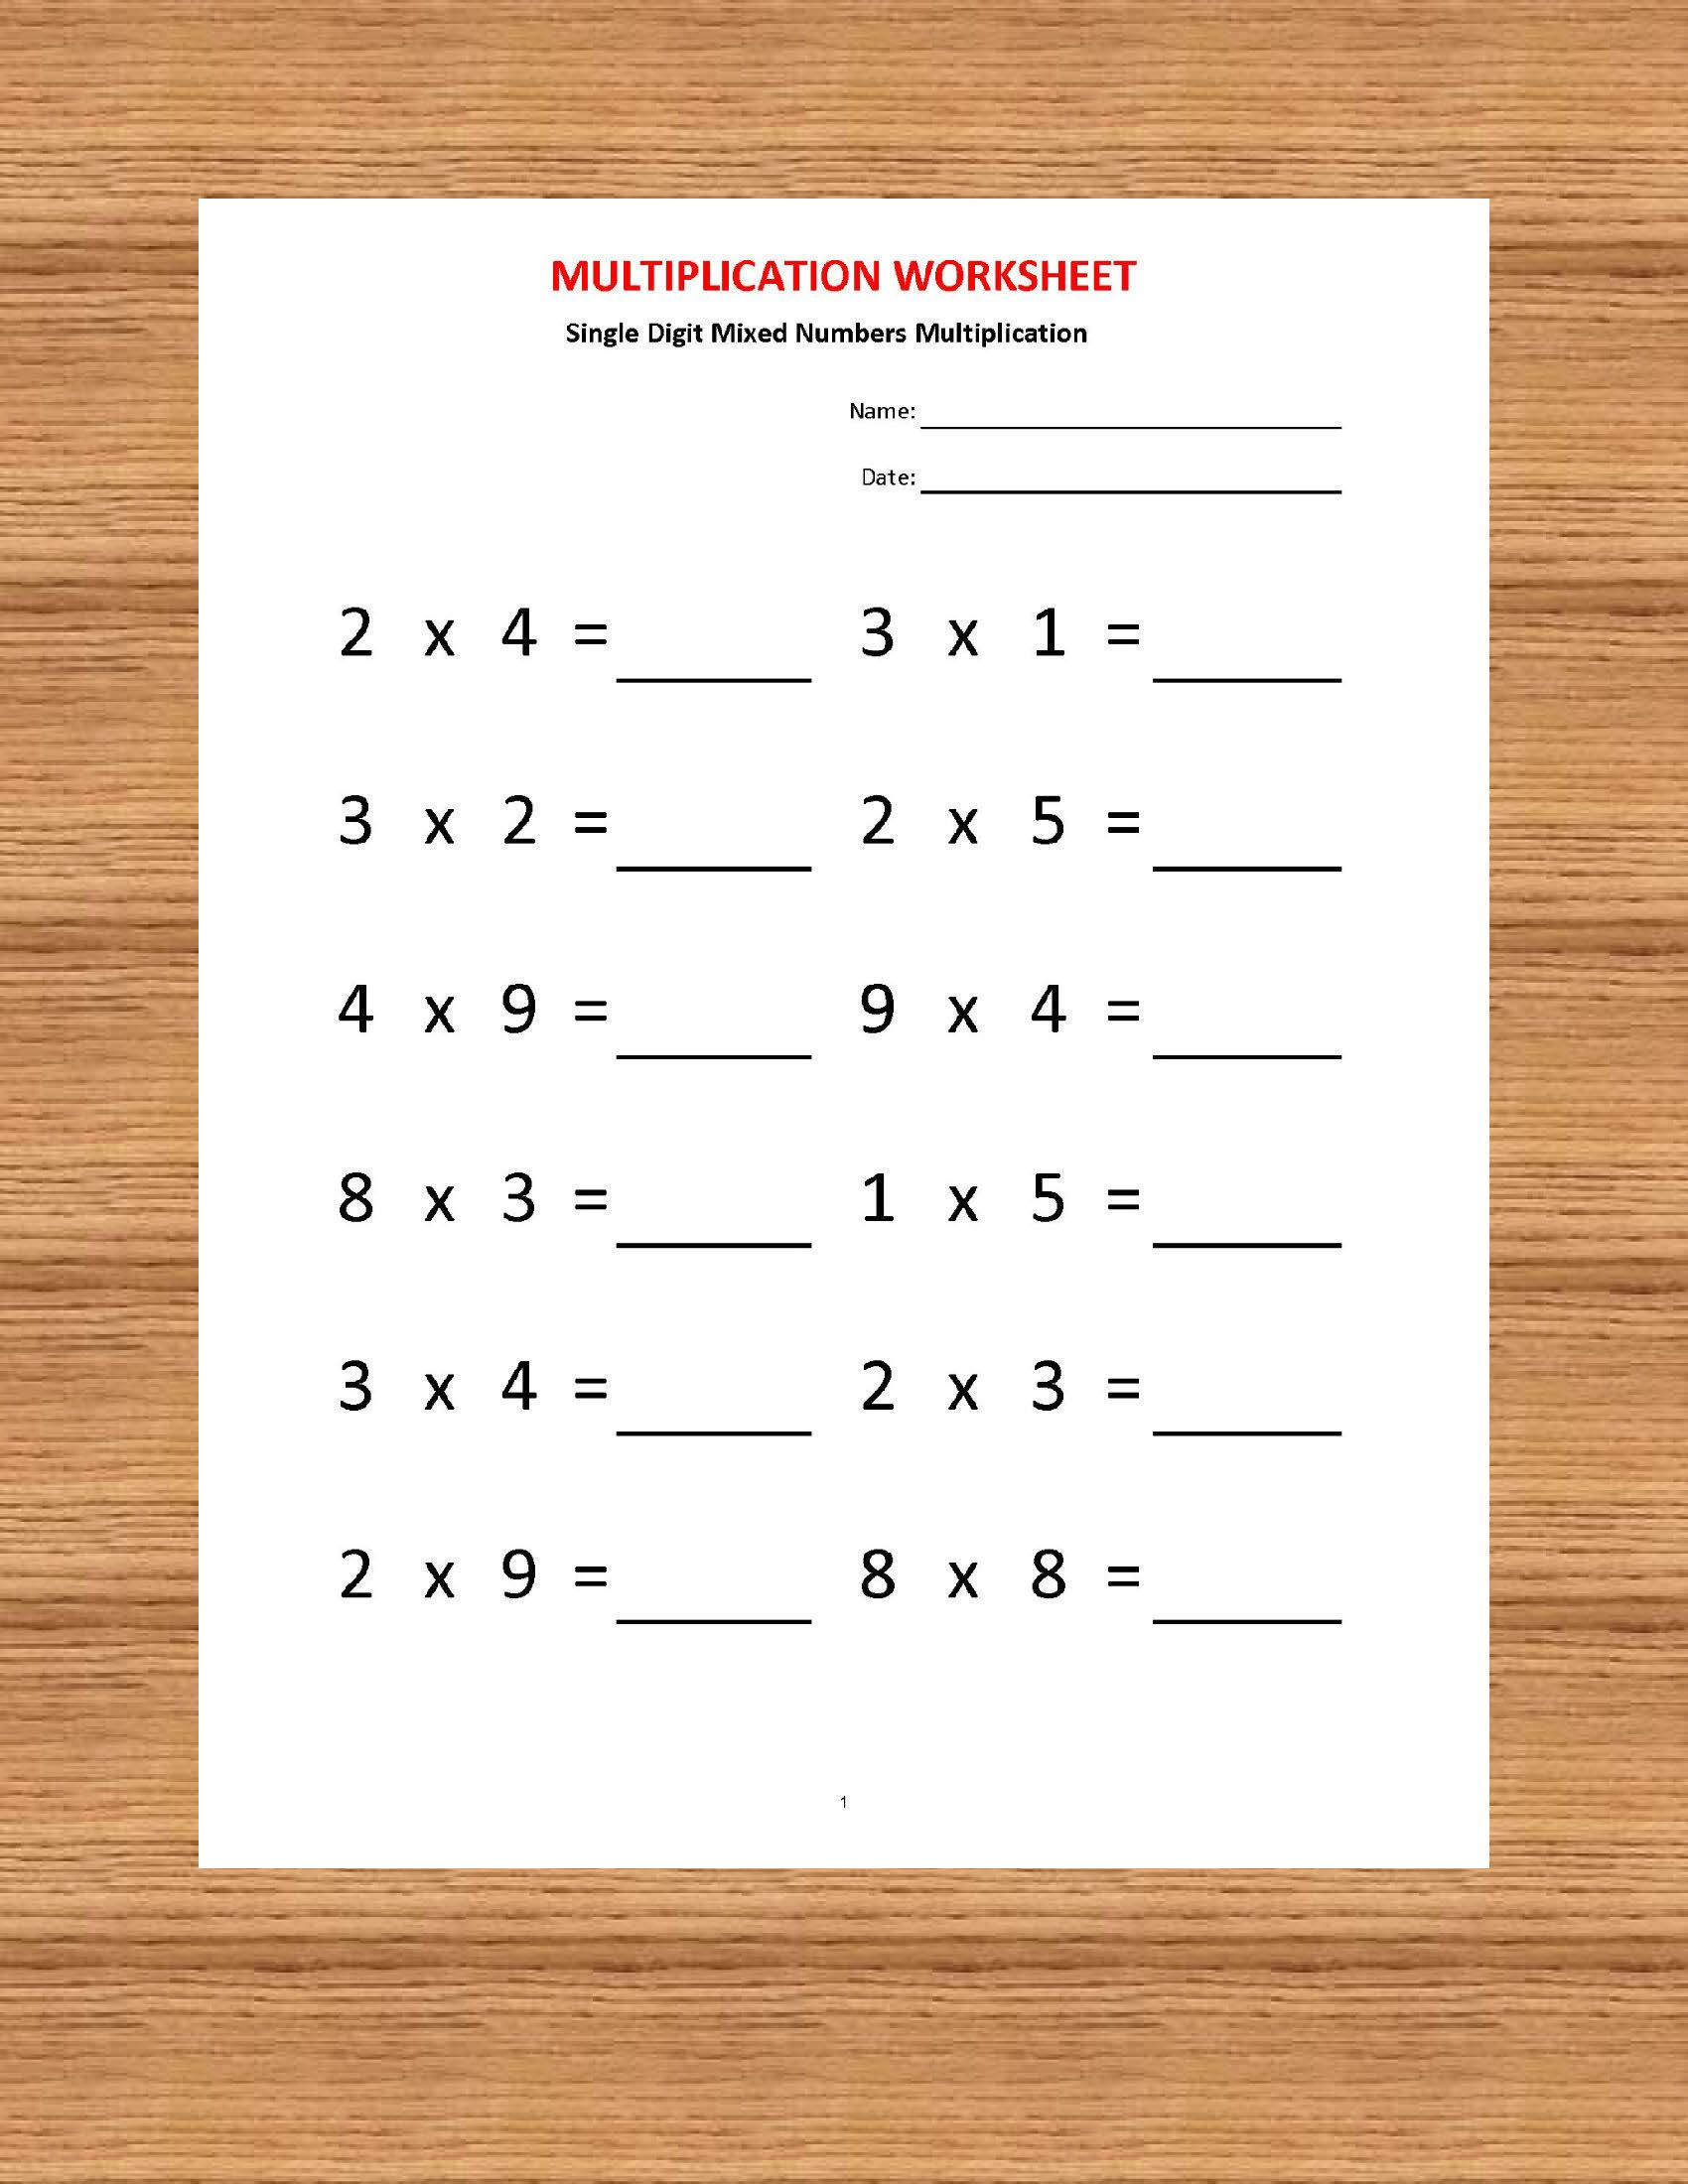 multiplication-worksheets-9-12-printablemultiplication